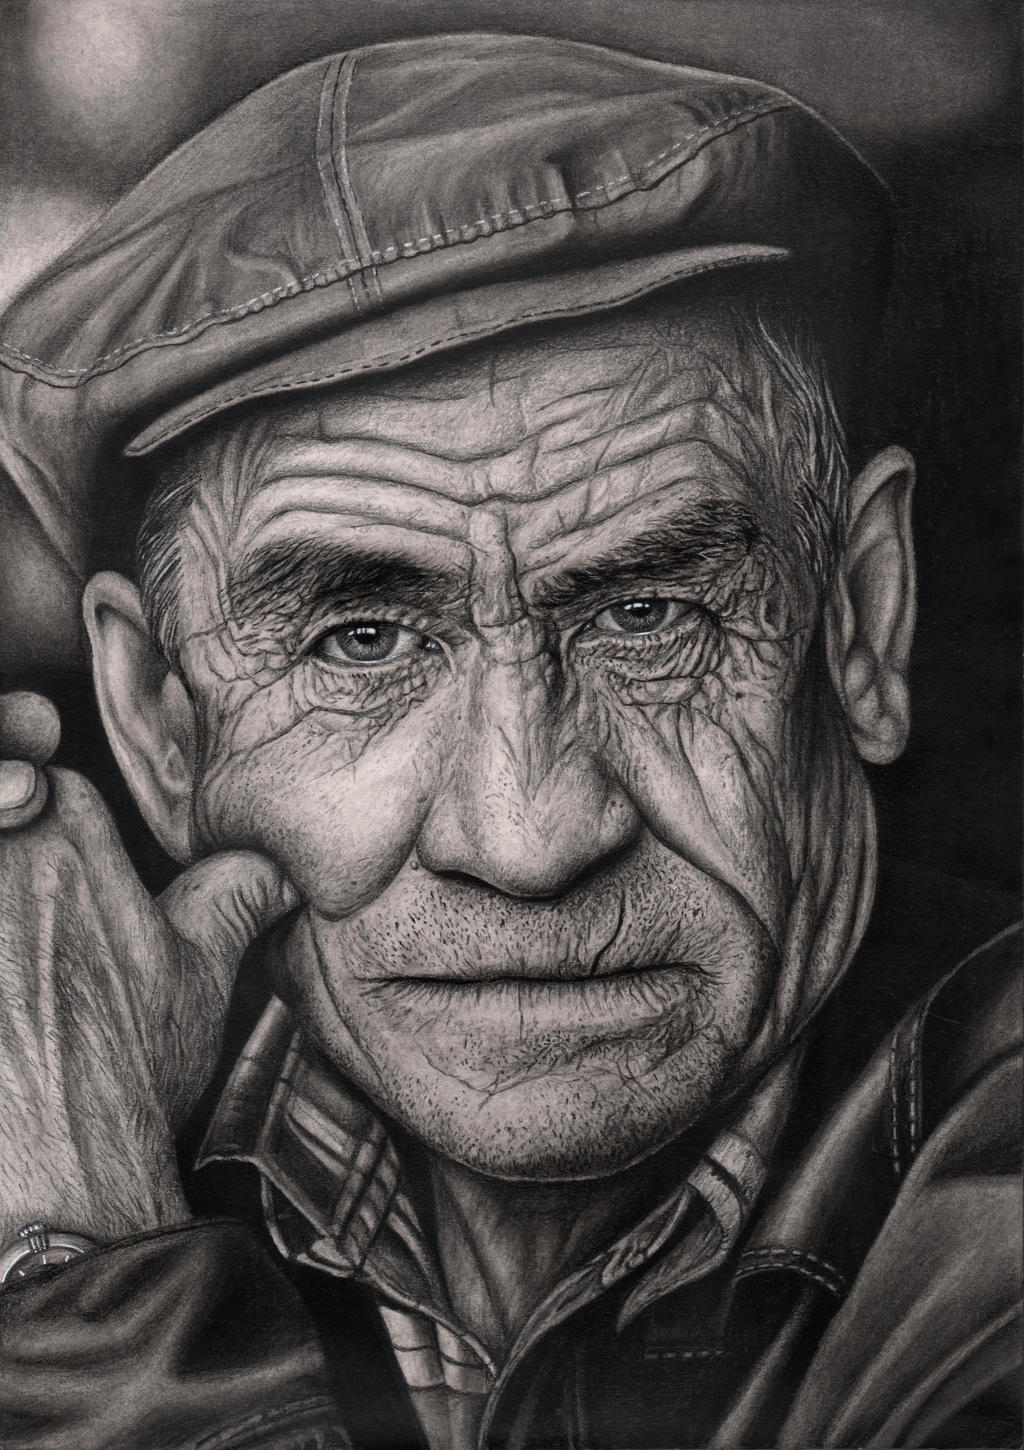 'OLD MAN' graphite drawing by PenTacularArtist on DeviantArt